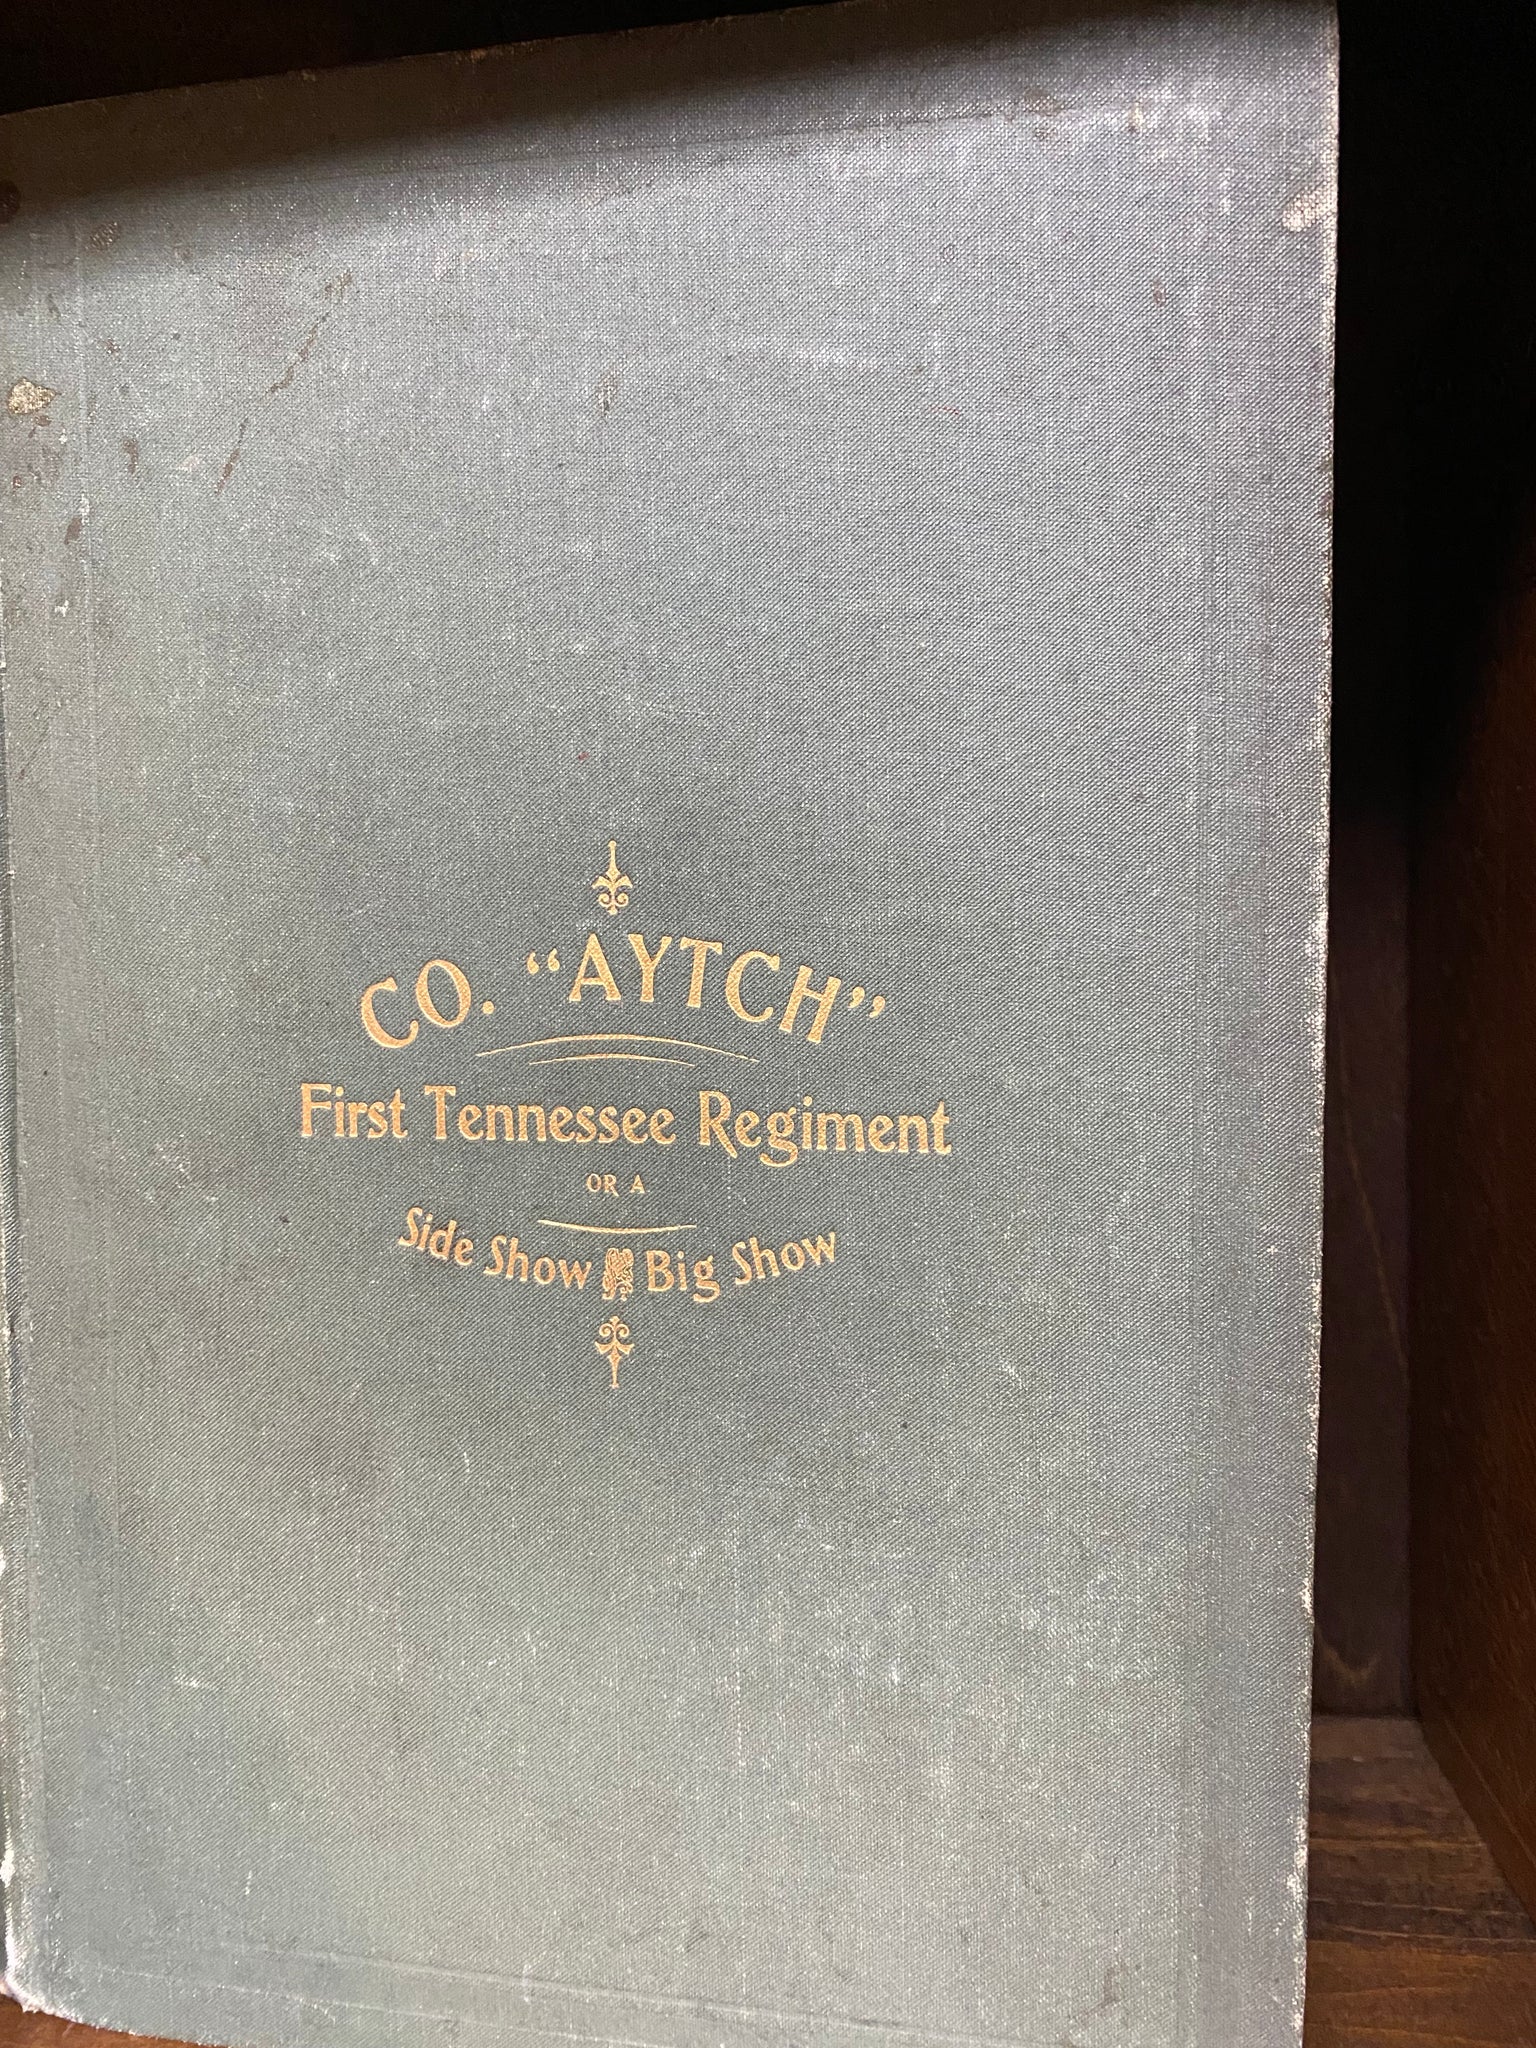 Co. Aytch 2nd Edition